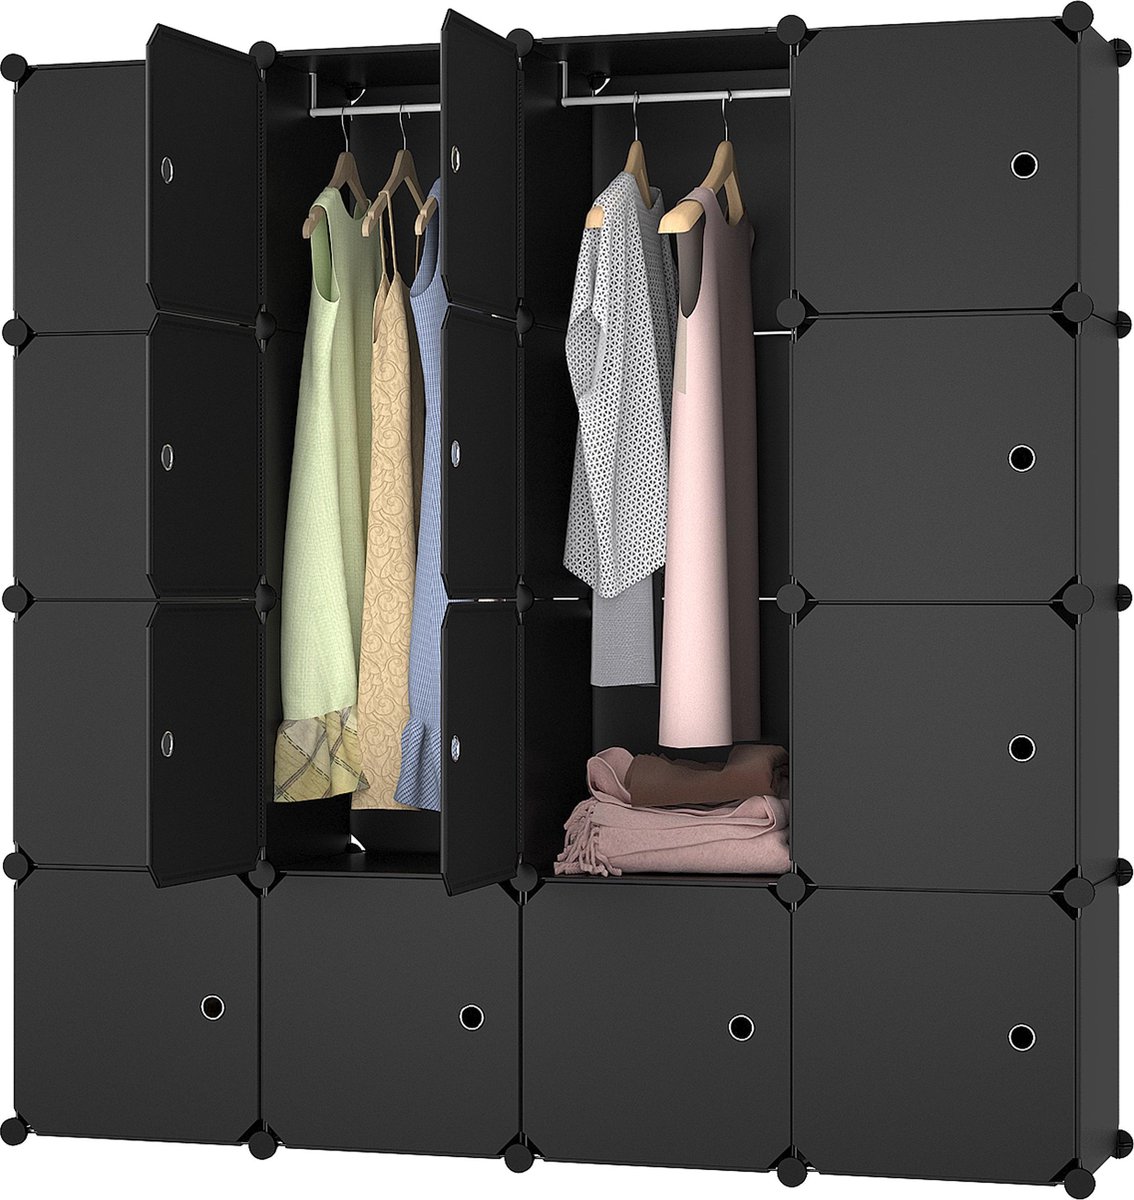 Lowander 4x4 vakkenkast 'Palermo' zwart 148x150 cm - kunststof kledingkast met hangruimte / roomdivider afsluitbaar - Lowander